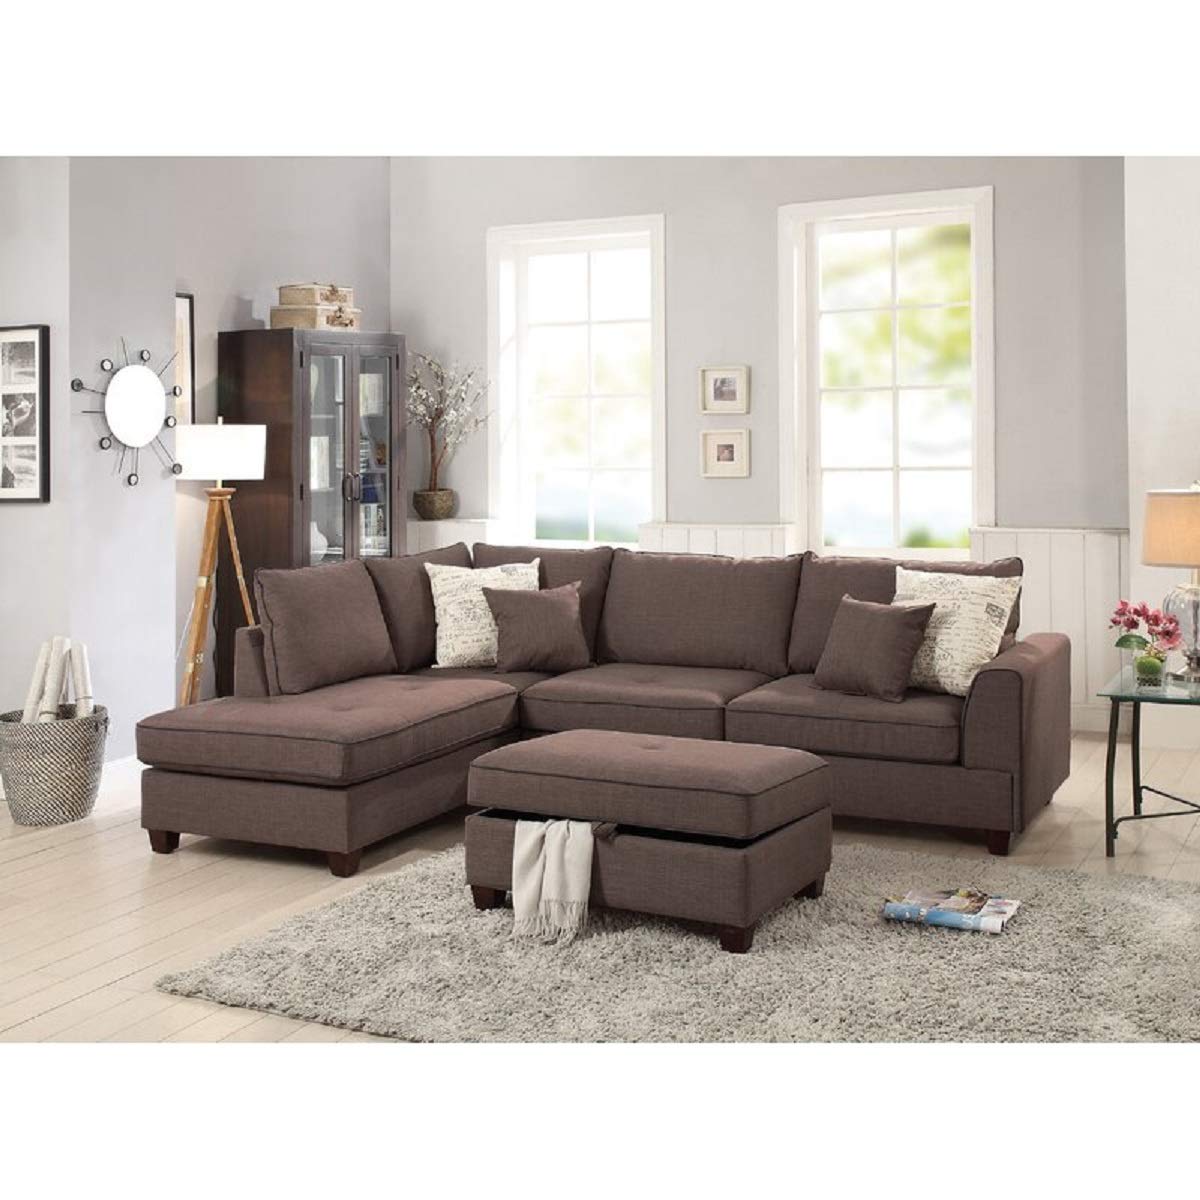 Designer Sofa Set:- Ray L shape 5 Seater Fabric Luxury Furniture Sofa Set